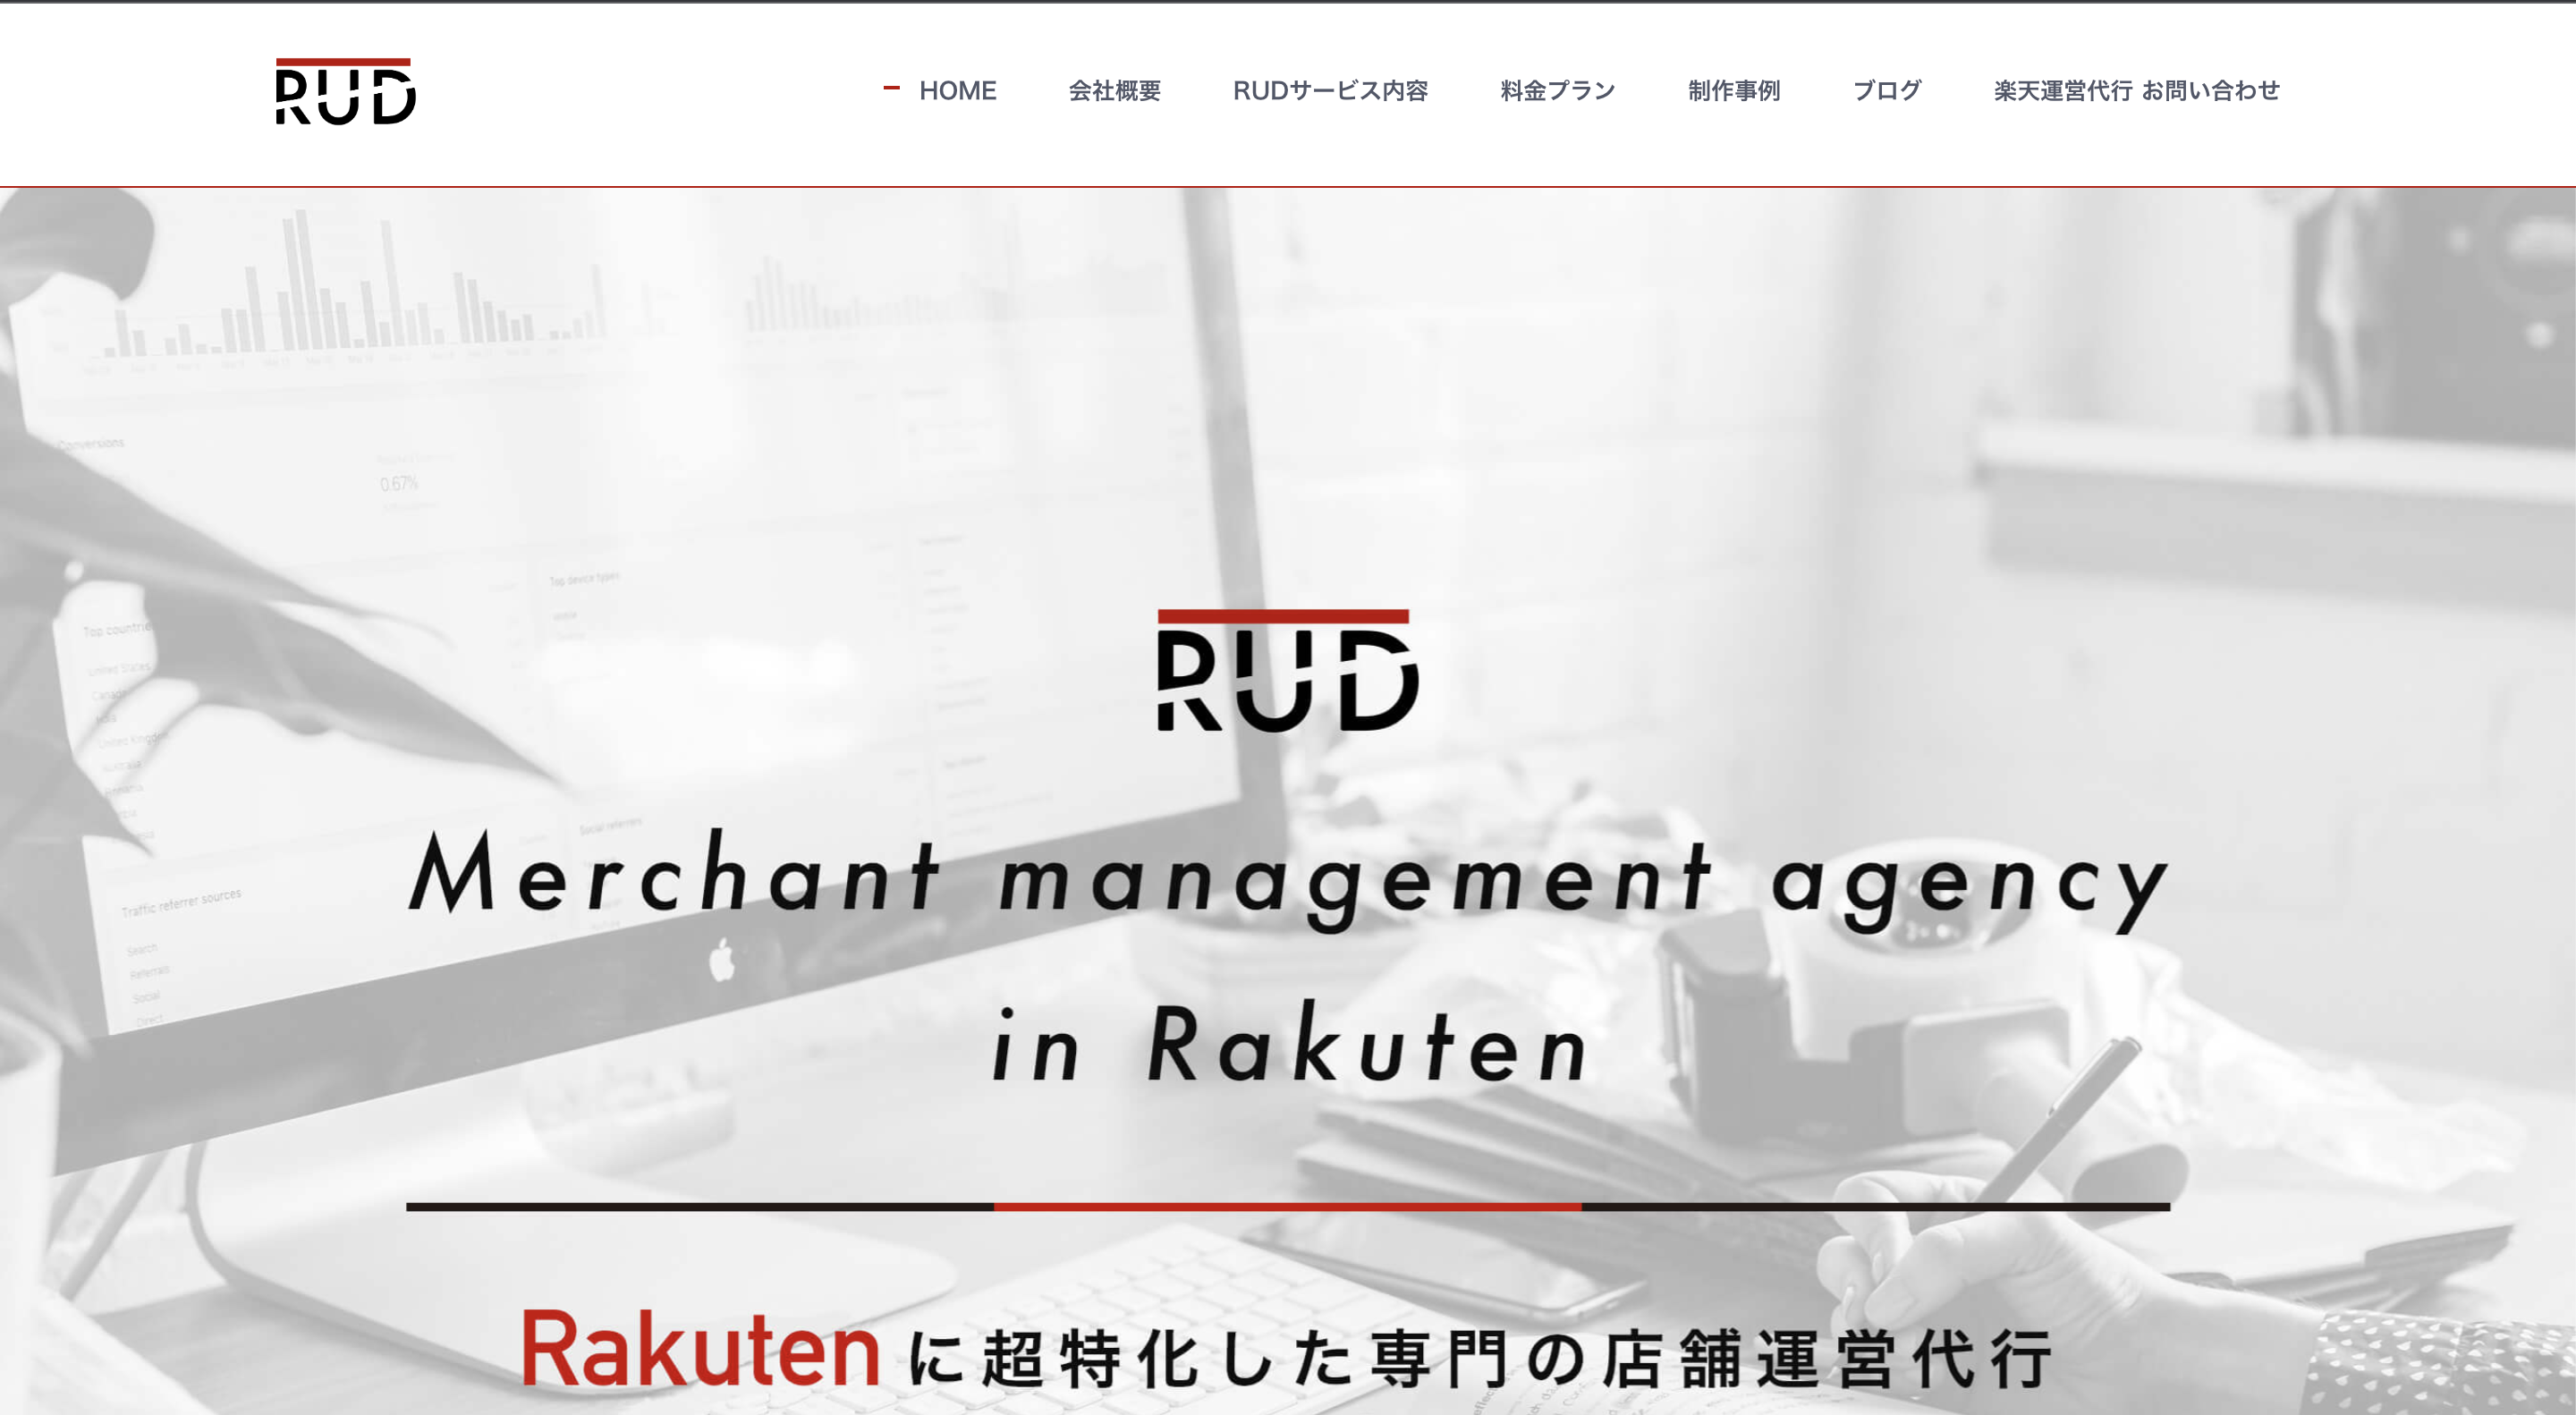 株式会社RUD